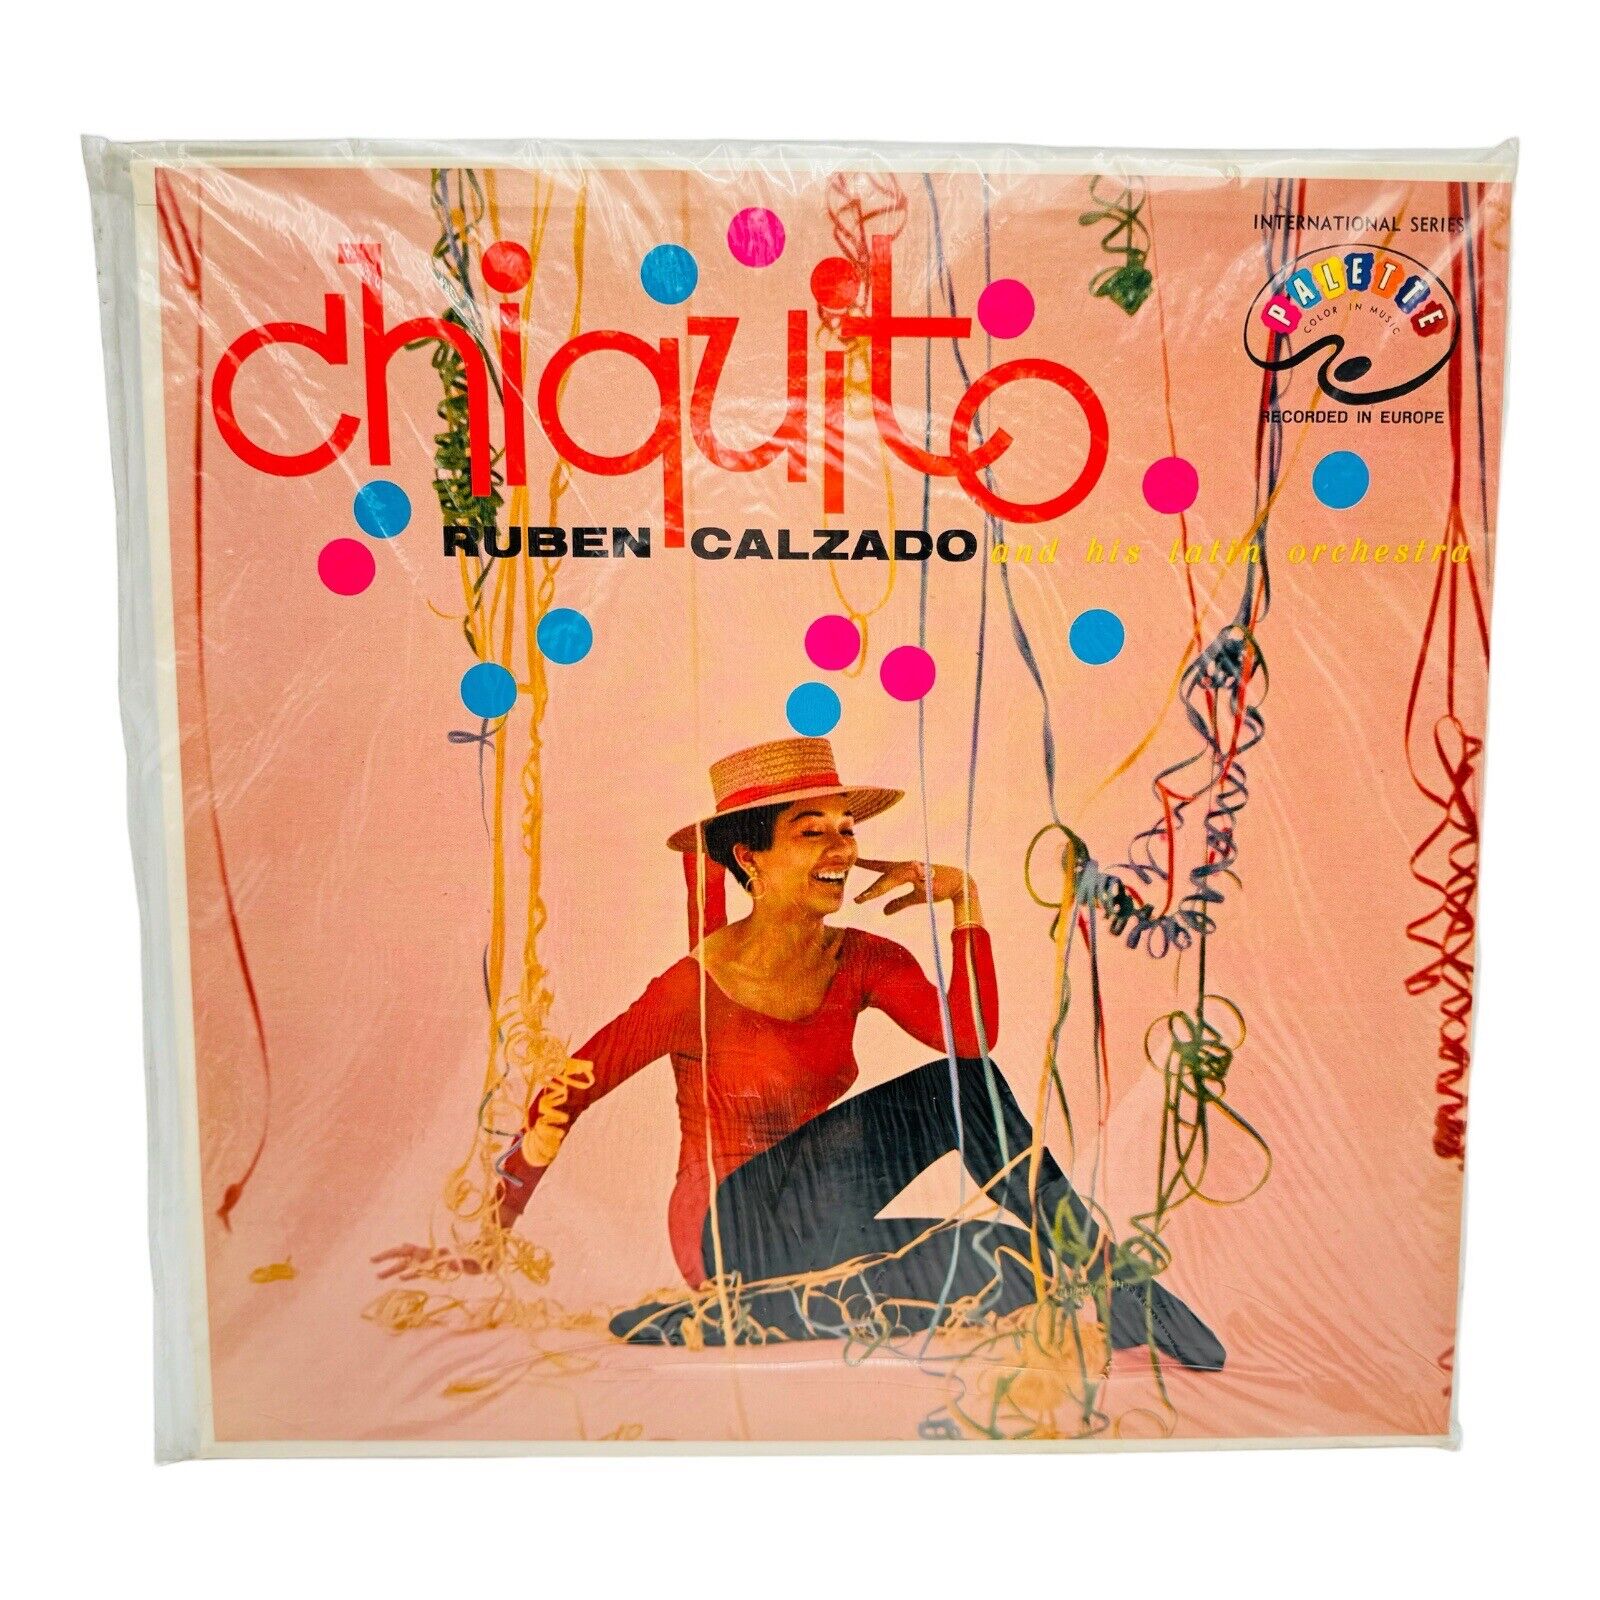 Ruben Calzado & His Latin Orchestra Chiquito Vinyl LP SEALED RARE